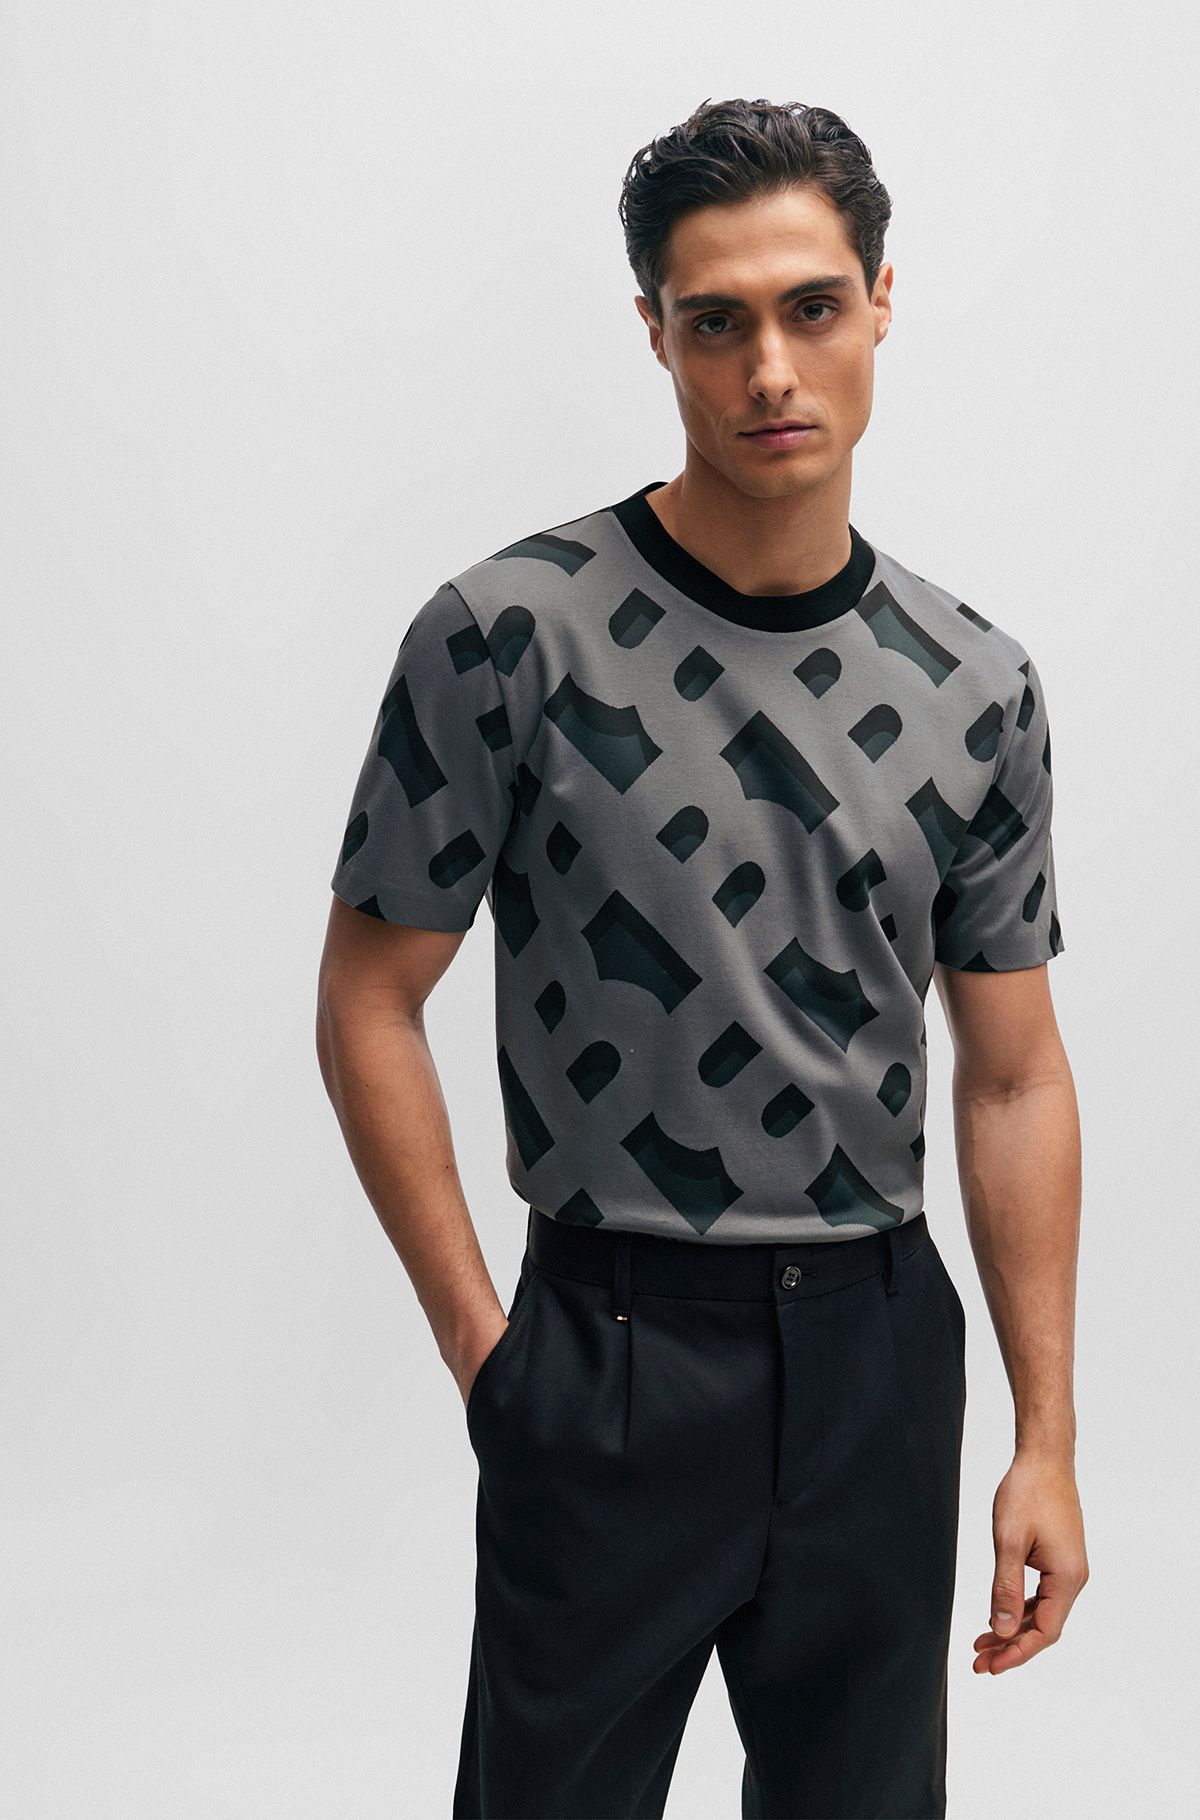 Monogram-jacquard T-shirt in mercerised stretch cotton, Grey Patterned